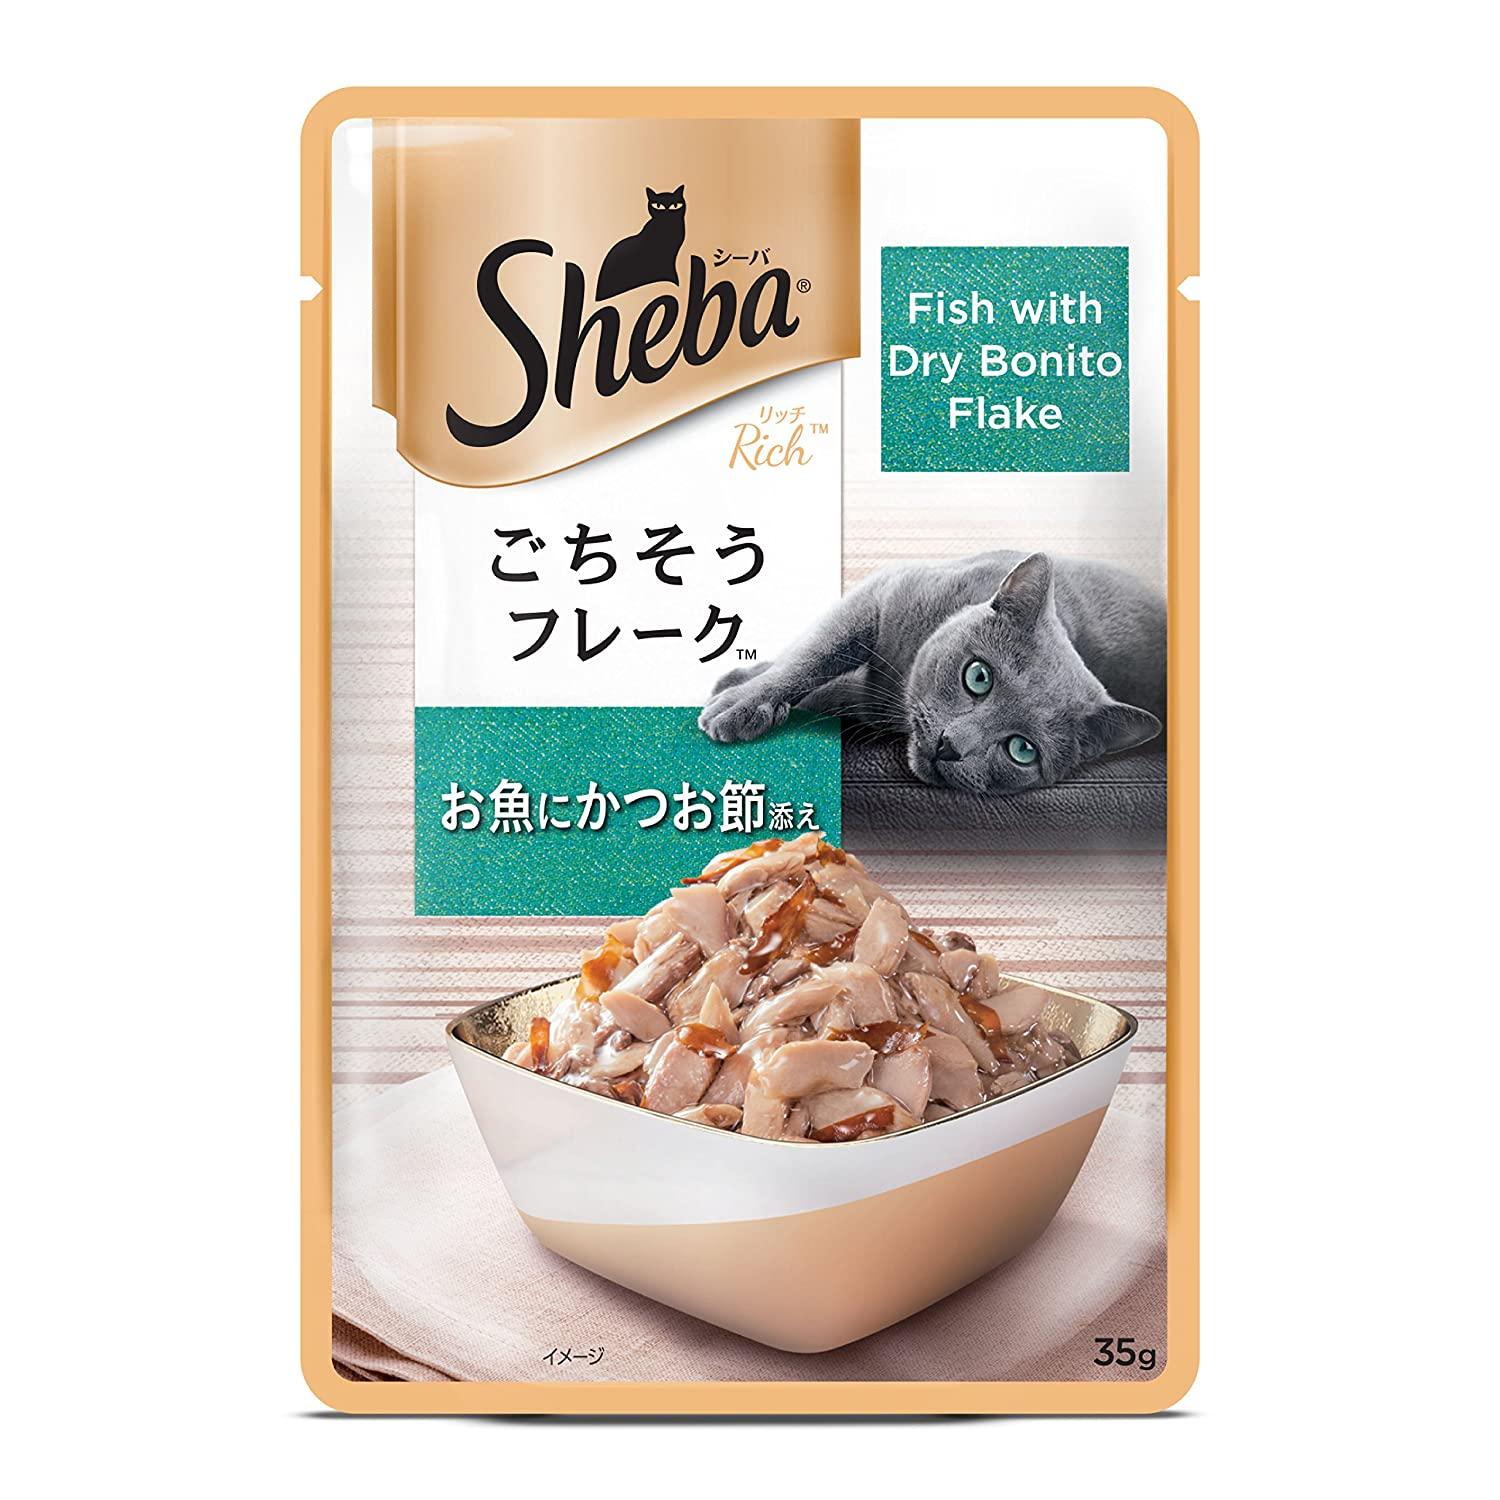 Sheba Rich Premium Wet Adult Cat Food (Fish with Dry Bonito Flake) 35g